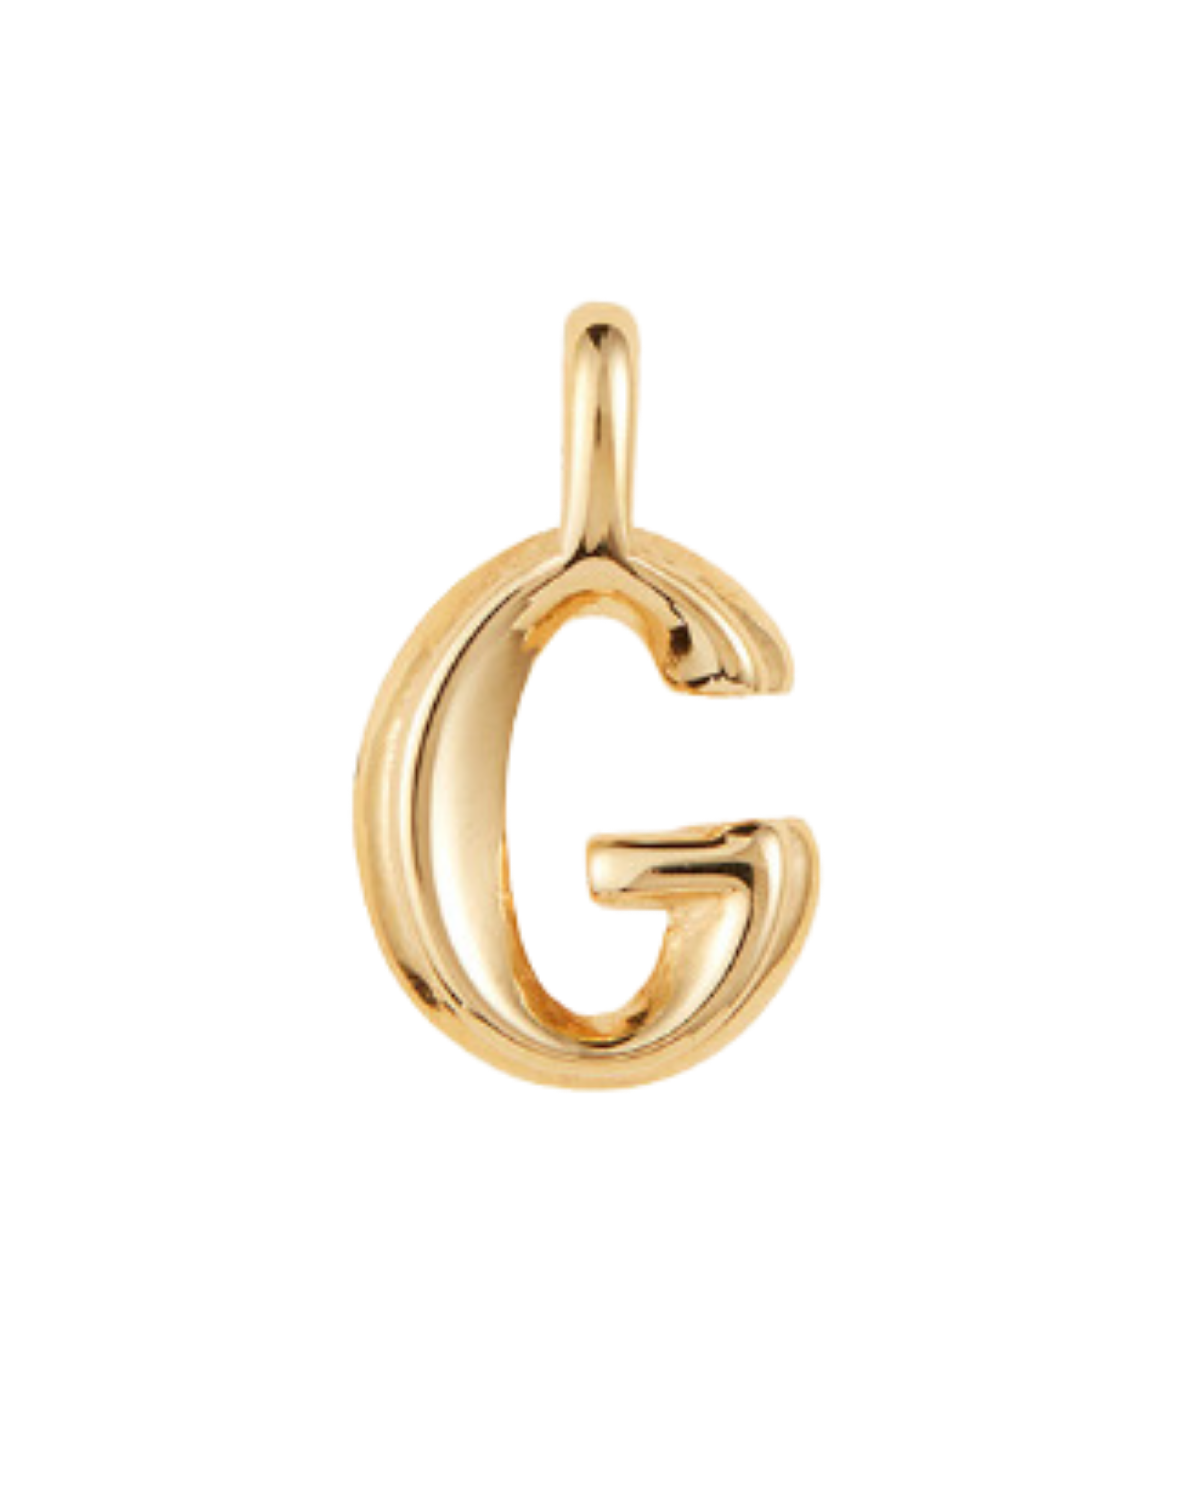 Monogram Pendant - G (Gold)